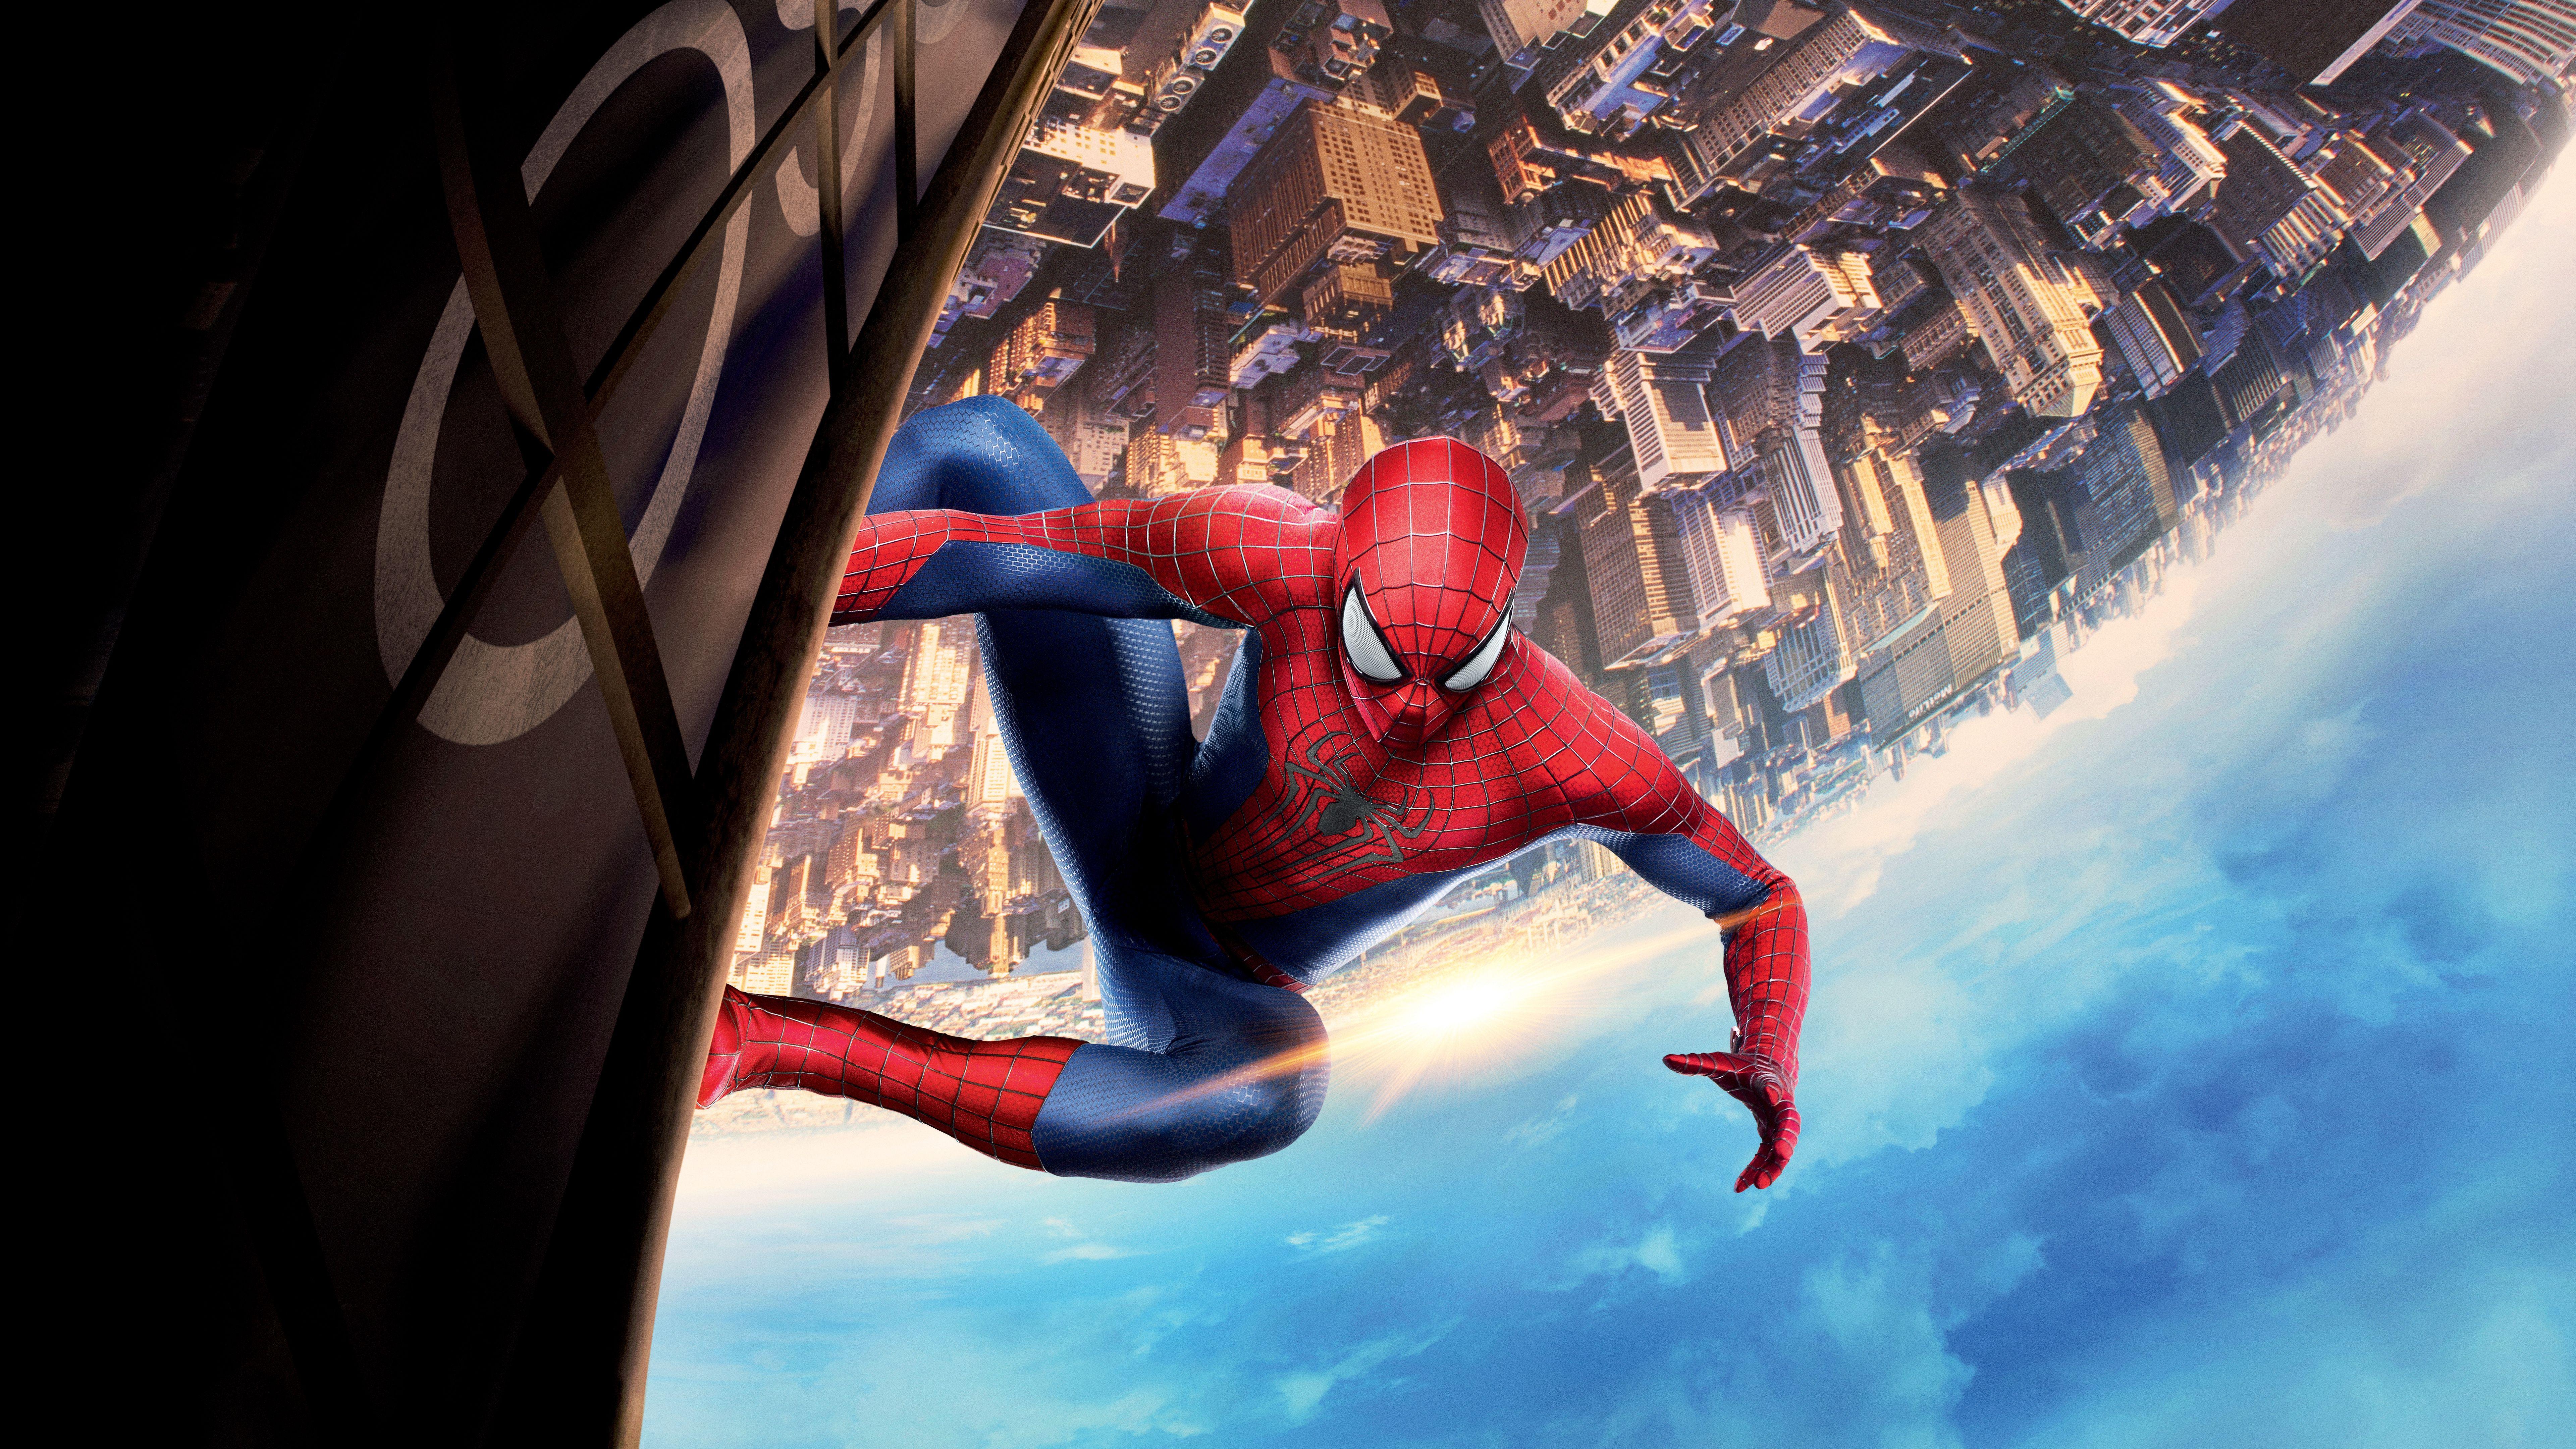 4K Spiderman Wallpapers - Top Free 4K Spiderman Backgrounds